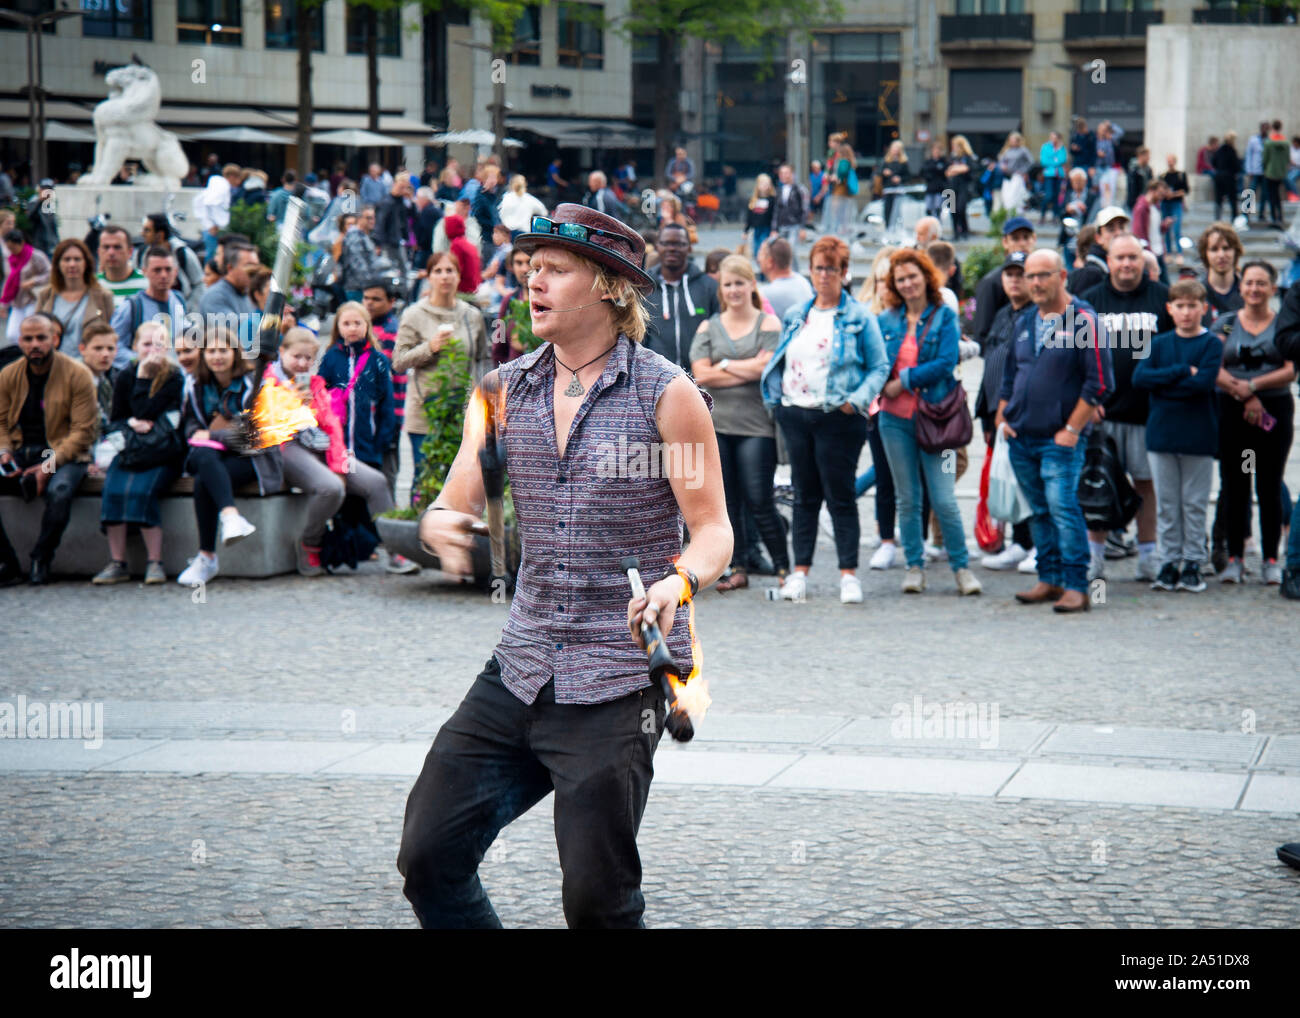 street animador malabares ardiendo palos entreteniendo a una gran multitud, Dam Square, Amsterdam, Holanda. Foto de stock